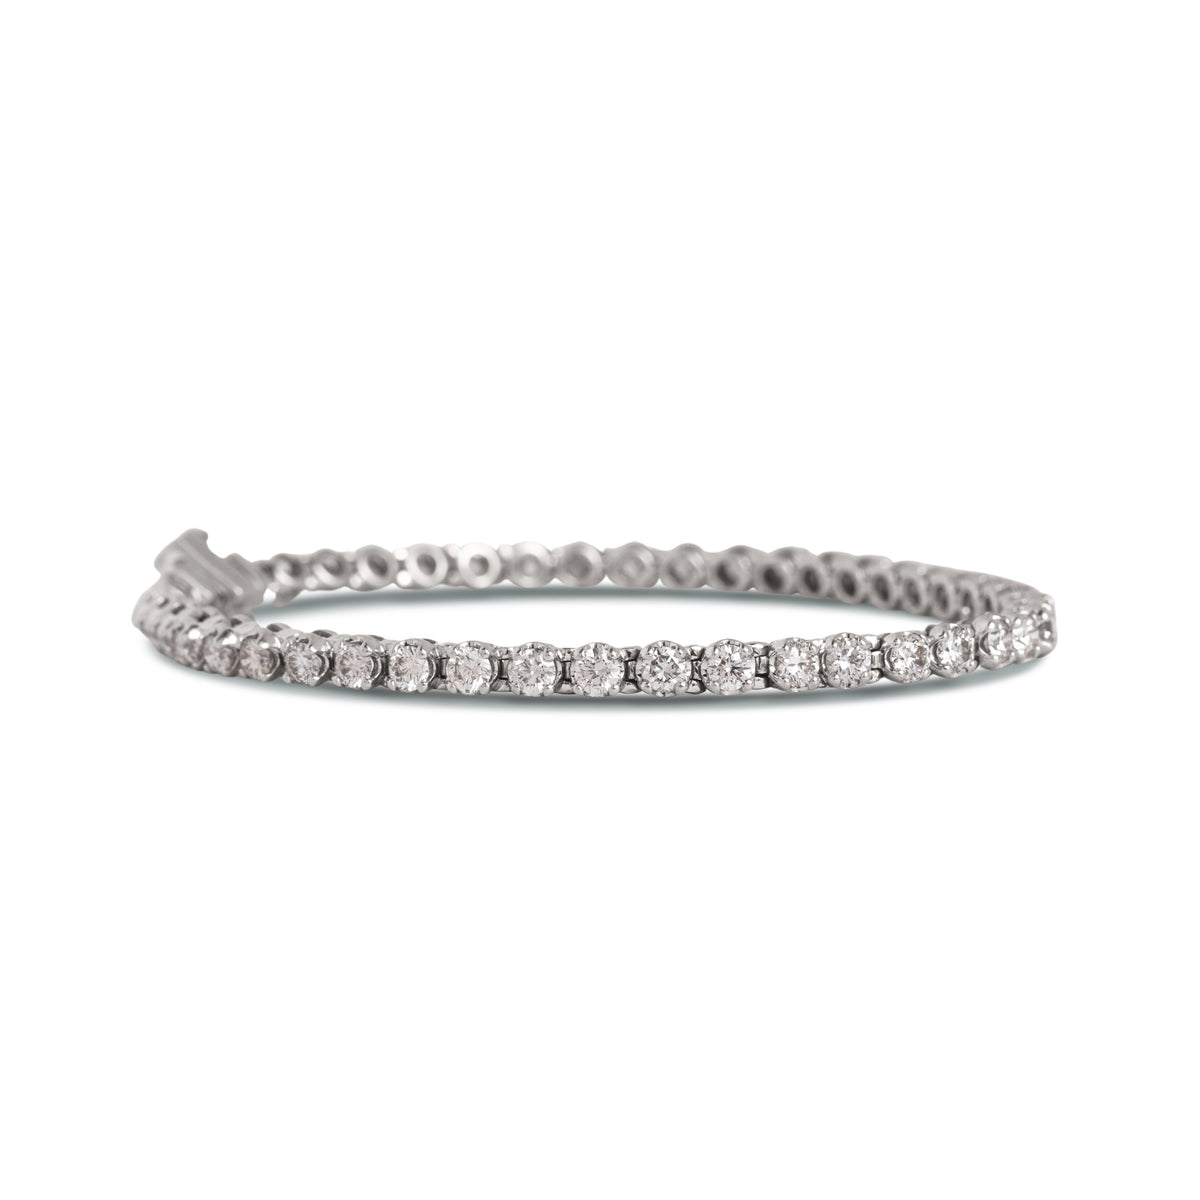 10k white gold estate diamond tennis bracelet